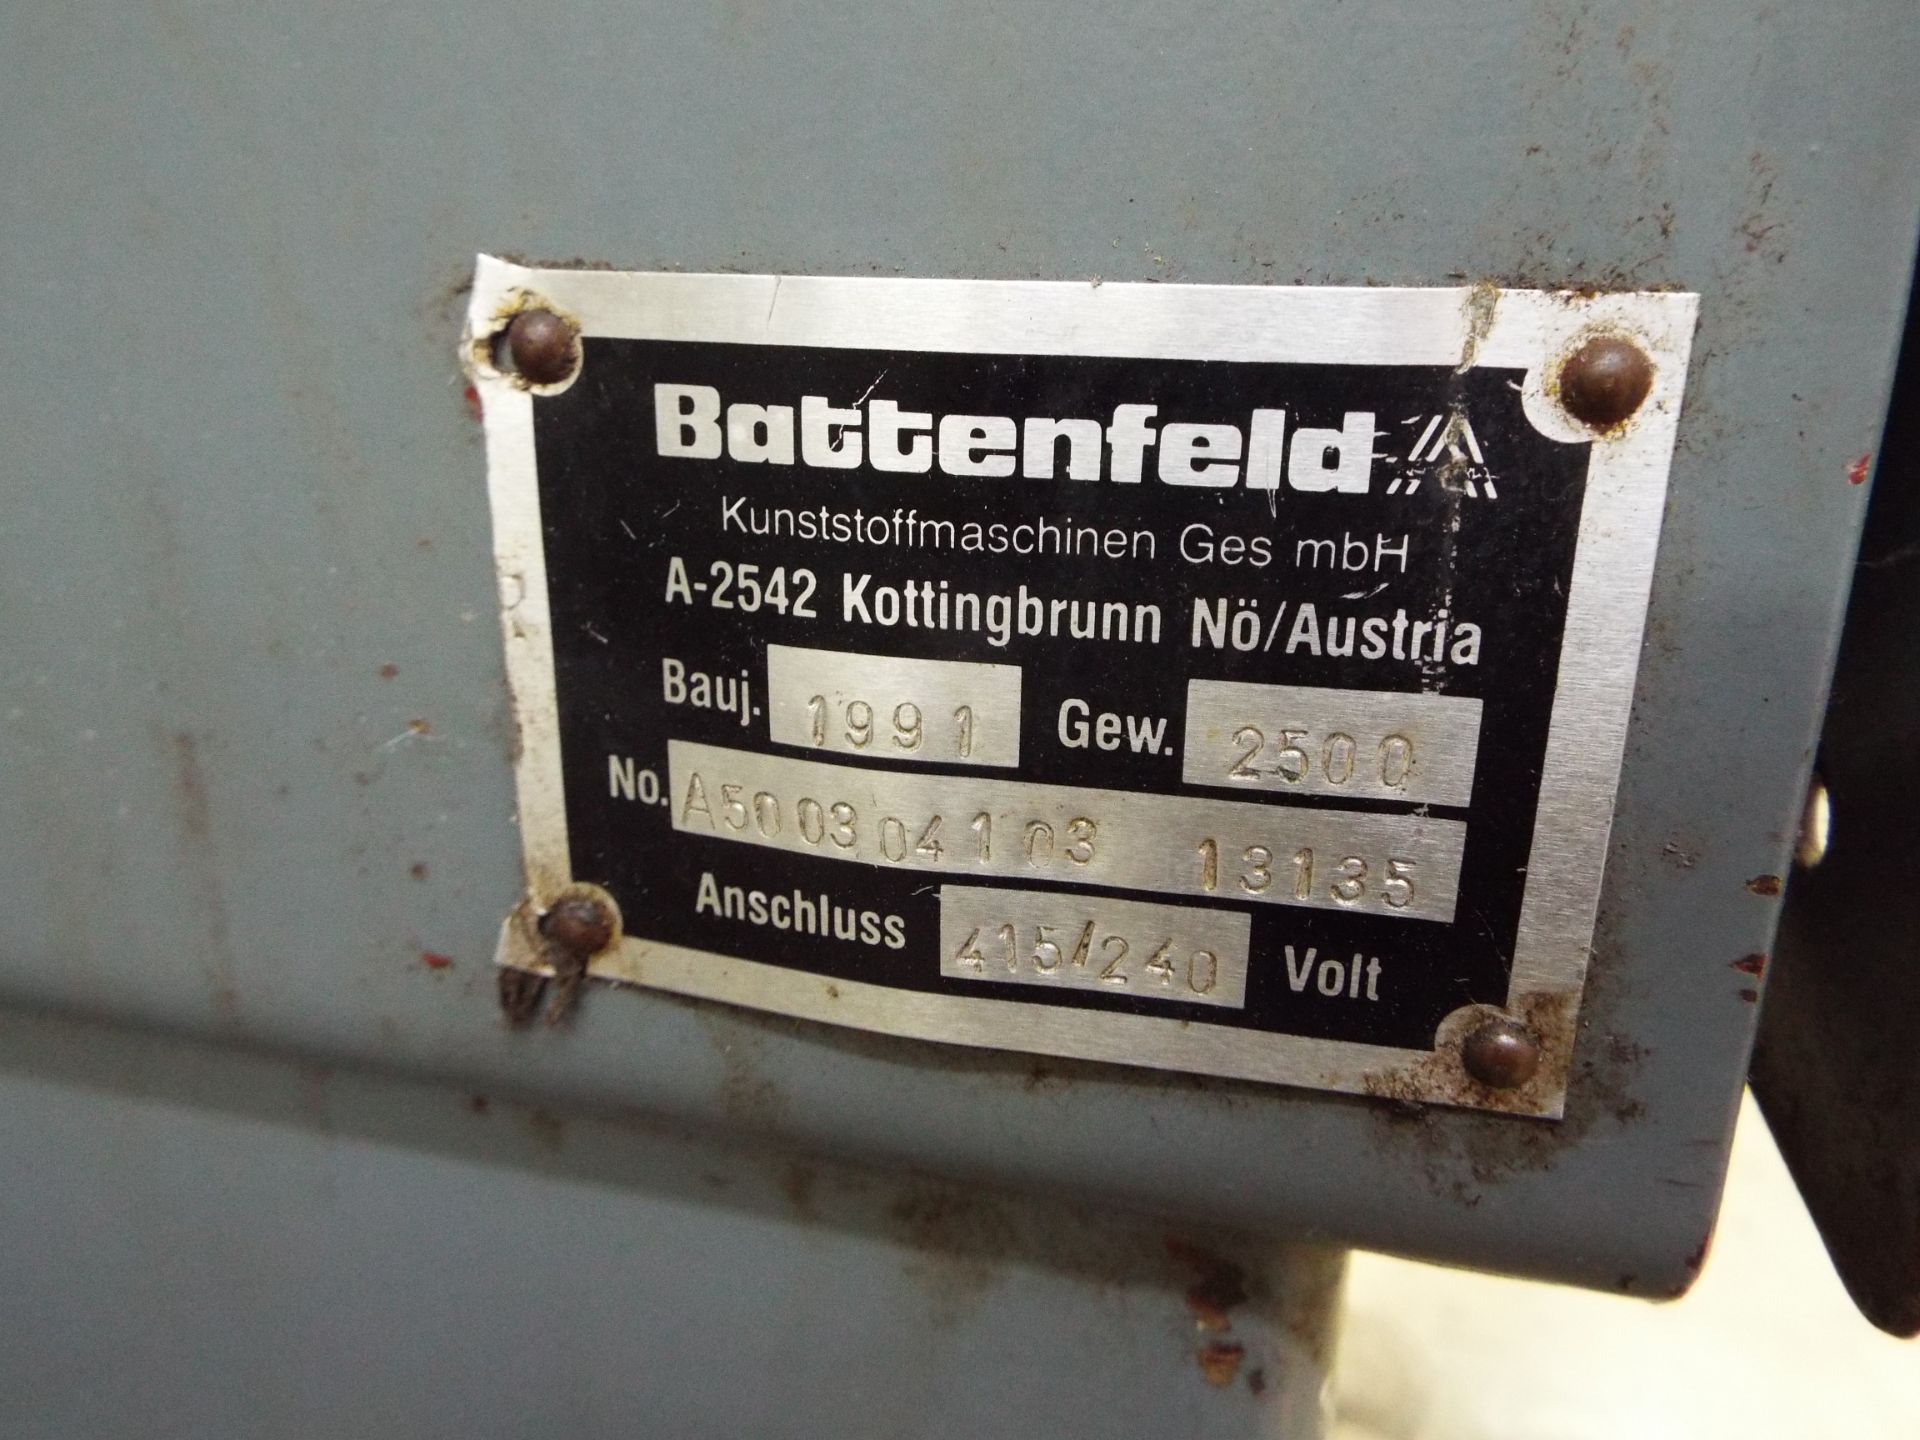 Battenfeld BA500 CD Plus Plastic Injection Moulding Machine cw Unilog 4000 Operating System. - Image 10 of 18